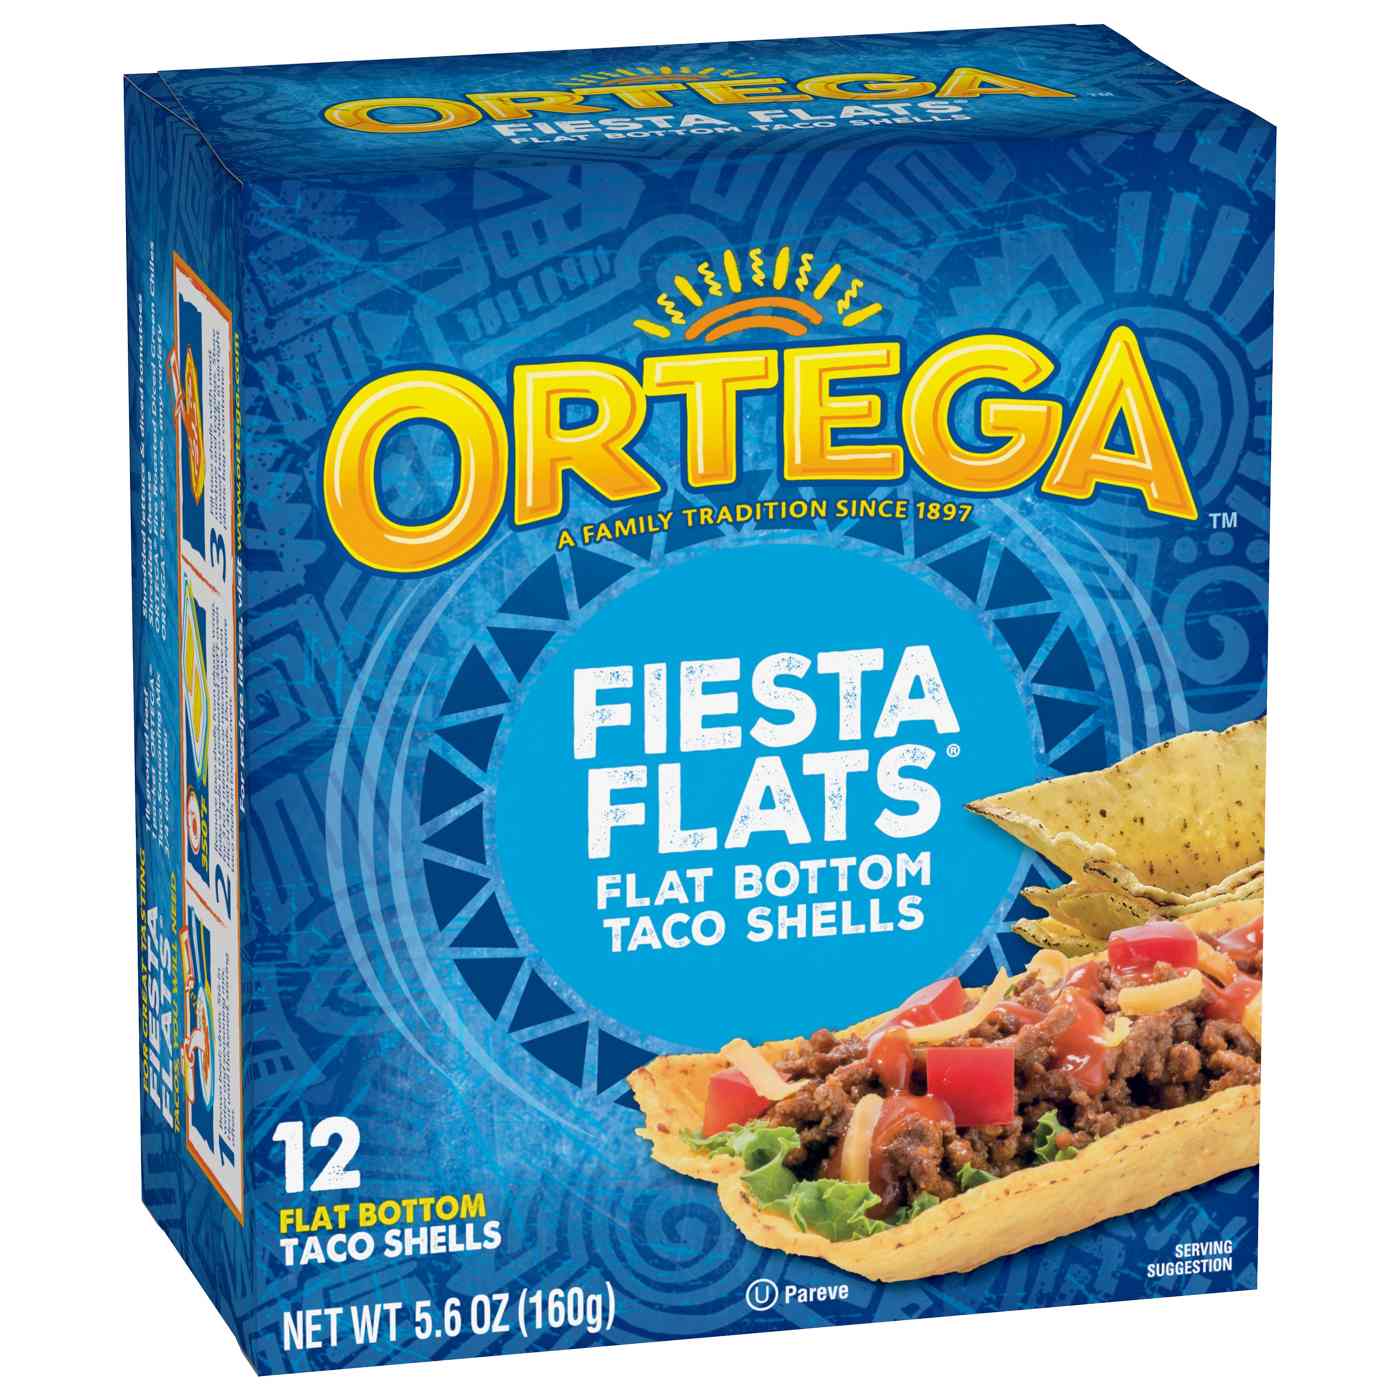 Ortega Fiesta Flats Flat Bottom Taco Shells; image 3 of 3